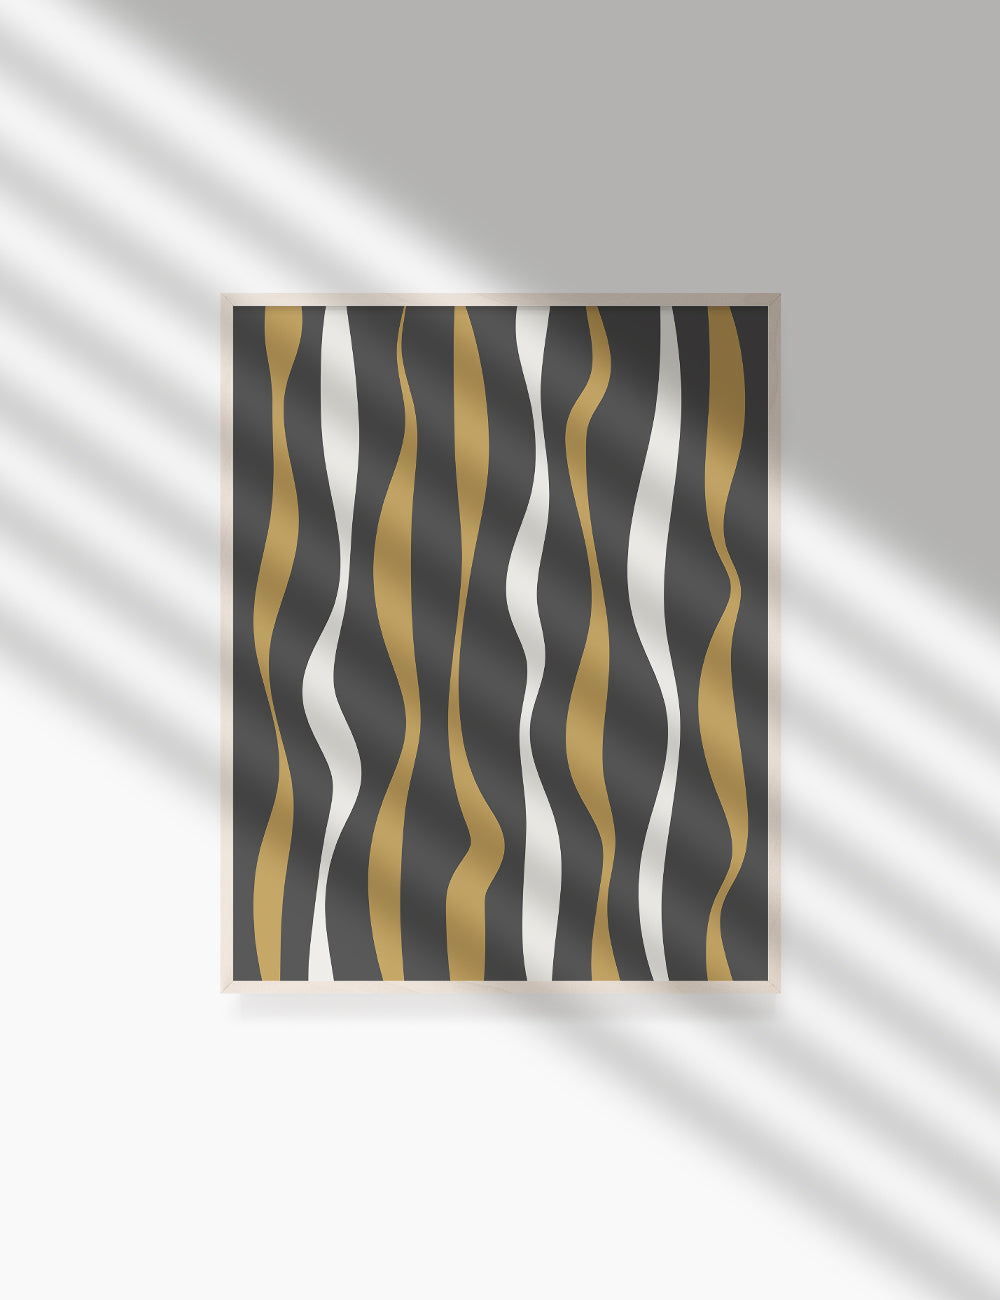 ABSTRACT MINIMAL WAVY LINES. Boho Art Print. Printable Wall Art Illustration. Wavy lines in dark grey, dull orange, and beige. Abstract art. Minimal design. Minimalist, abstract illustration art. Printable poster. | PAPER MOON Art & Design